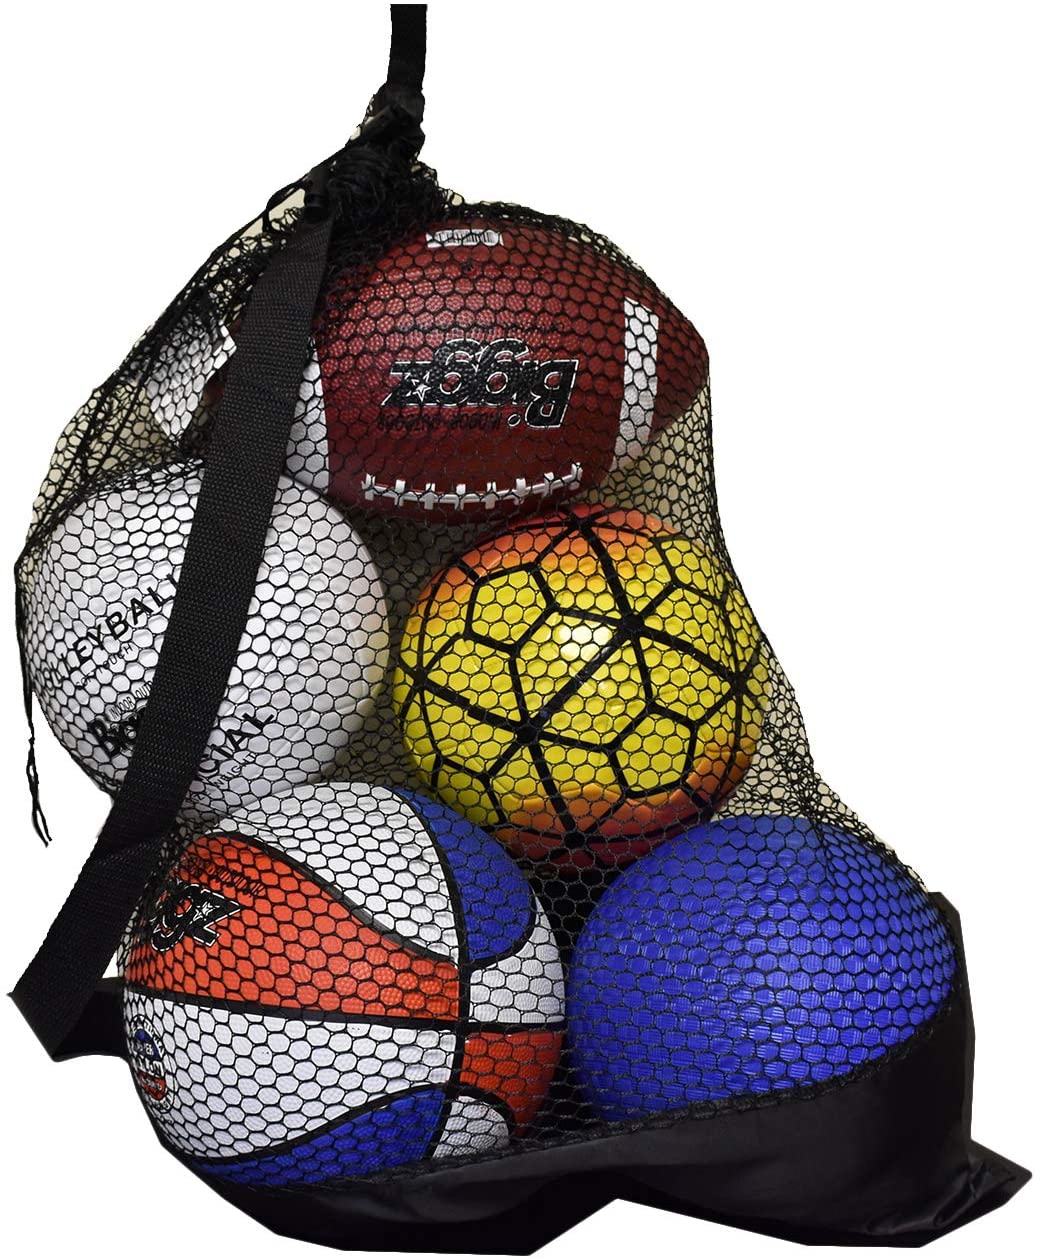 Heavy Duty Football Ball Carry Bag | Net World Sports